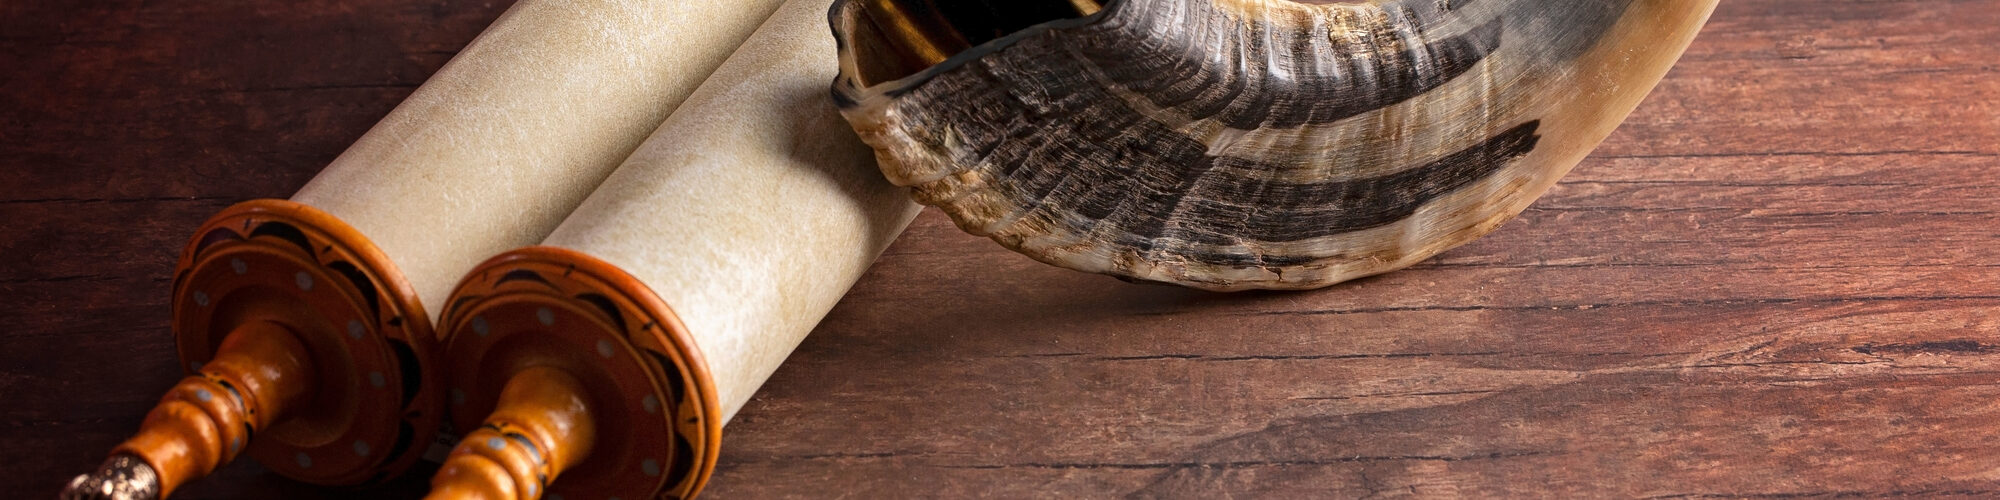 A Shofar Rams Horn and a Tora Scroll on a Wooden Table